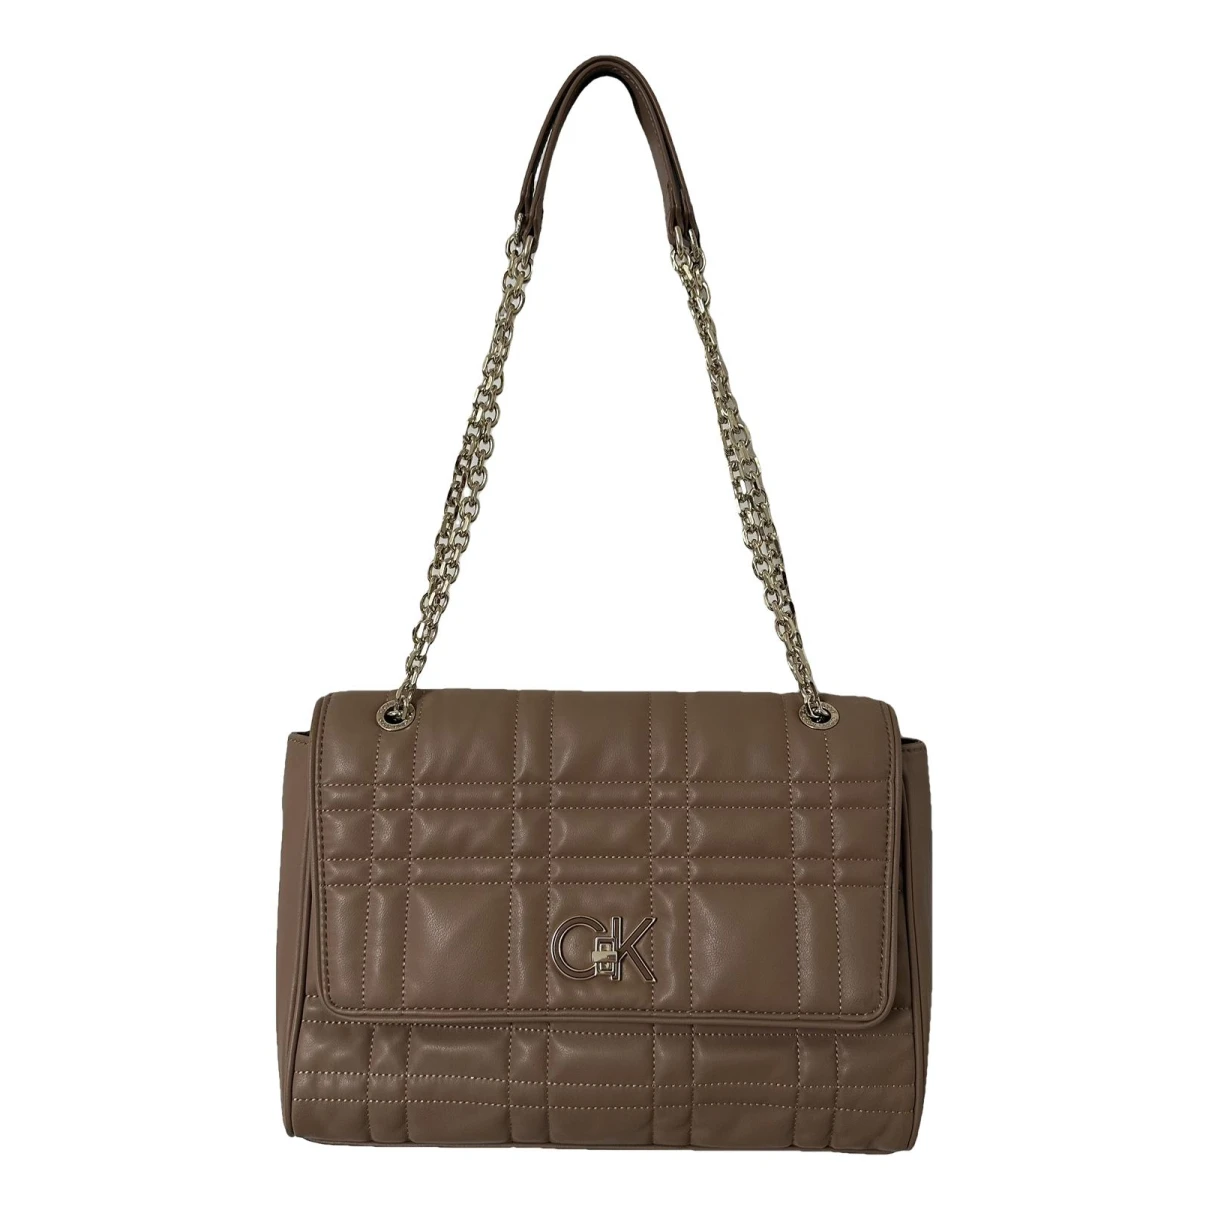 Pre-owned Calvin Klein Leather Handbag In Camel